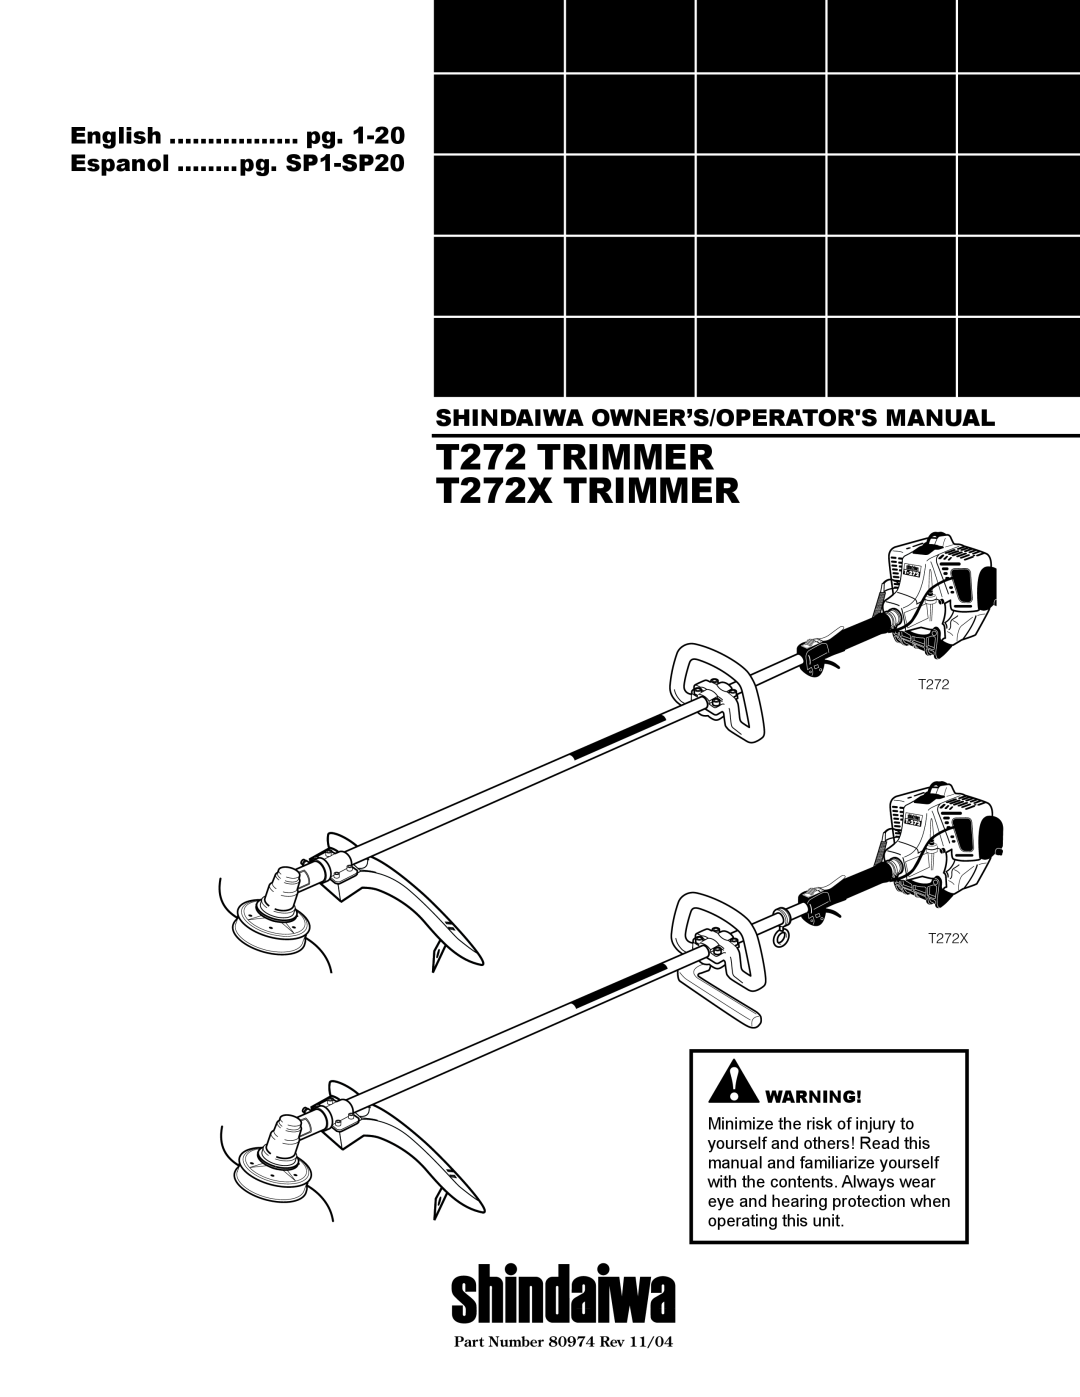 Shindaiwa 80974 manual T272 TRIMMER T272X TRIMMER, Espanol, pg. SP1-SP20, Shindaiwa Owner’S/Operators Manual, T272 T272X 